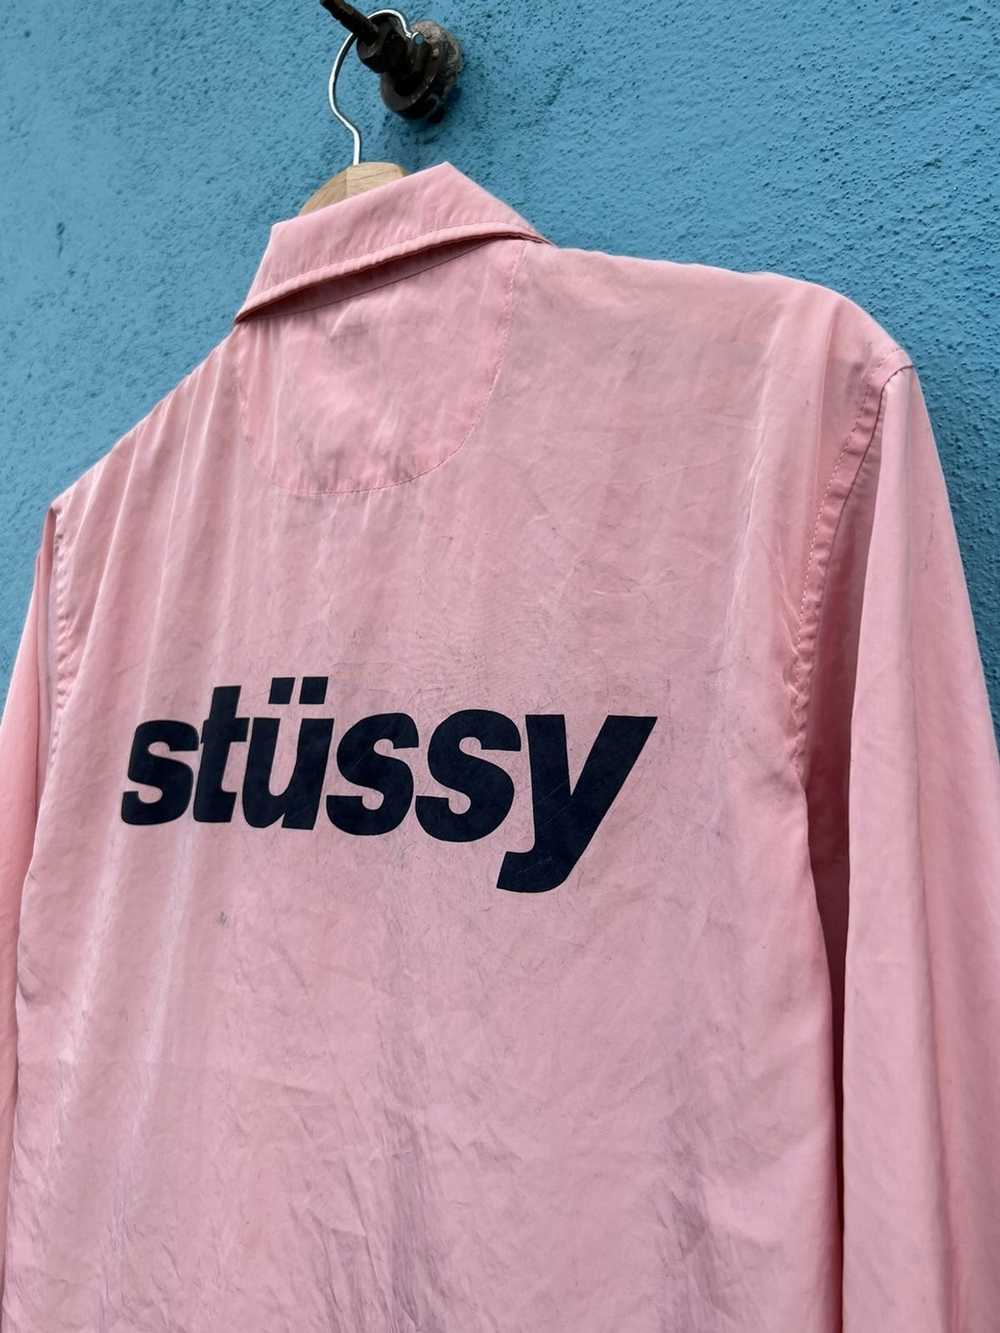 Stussy Stussy Windbreaker Pink Jacket - Gem